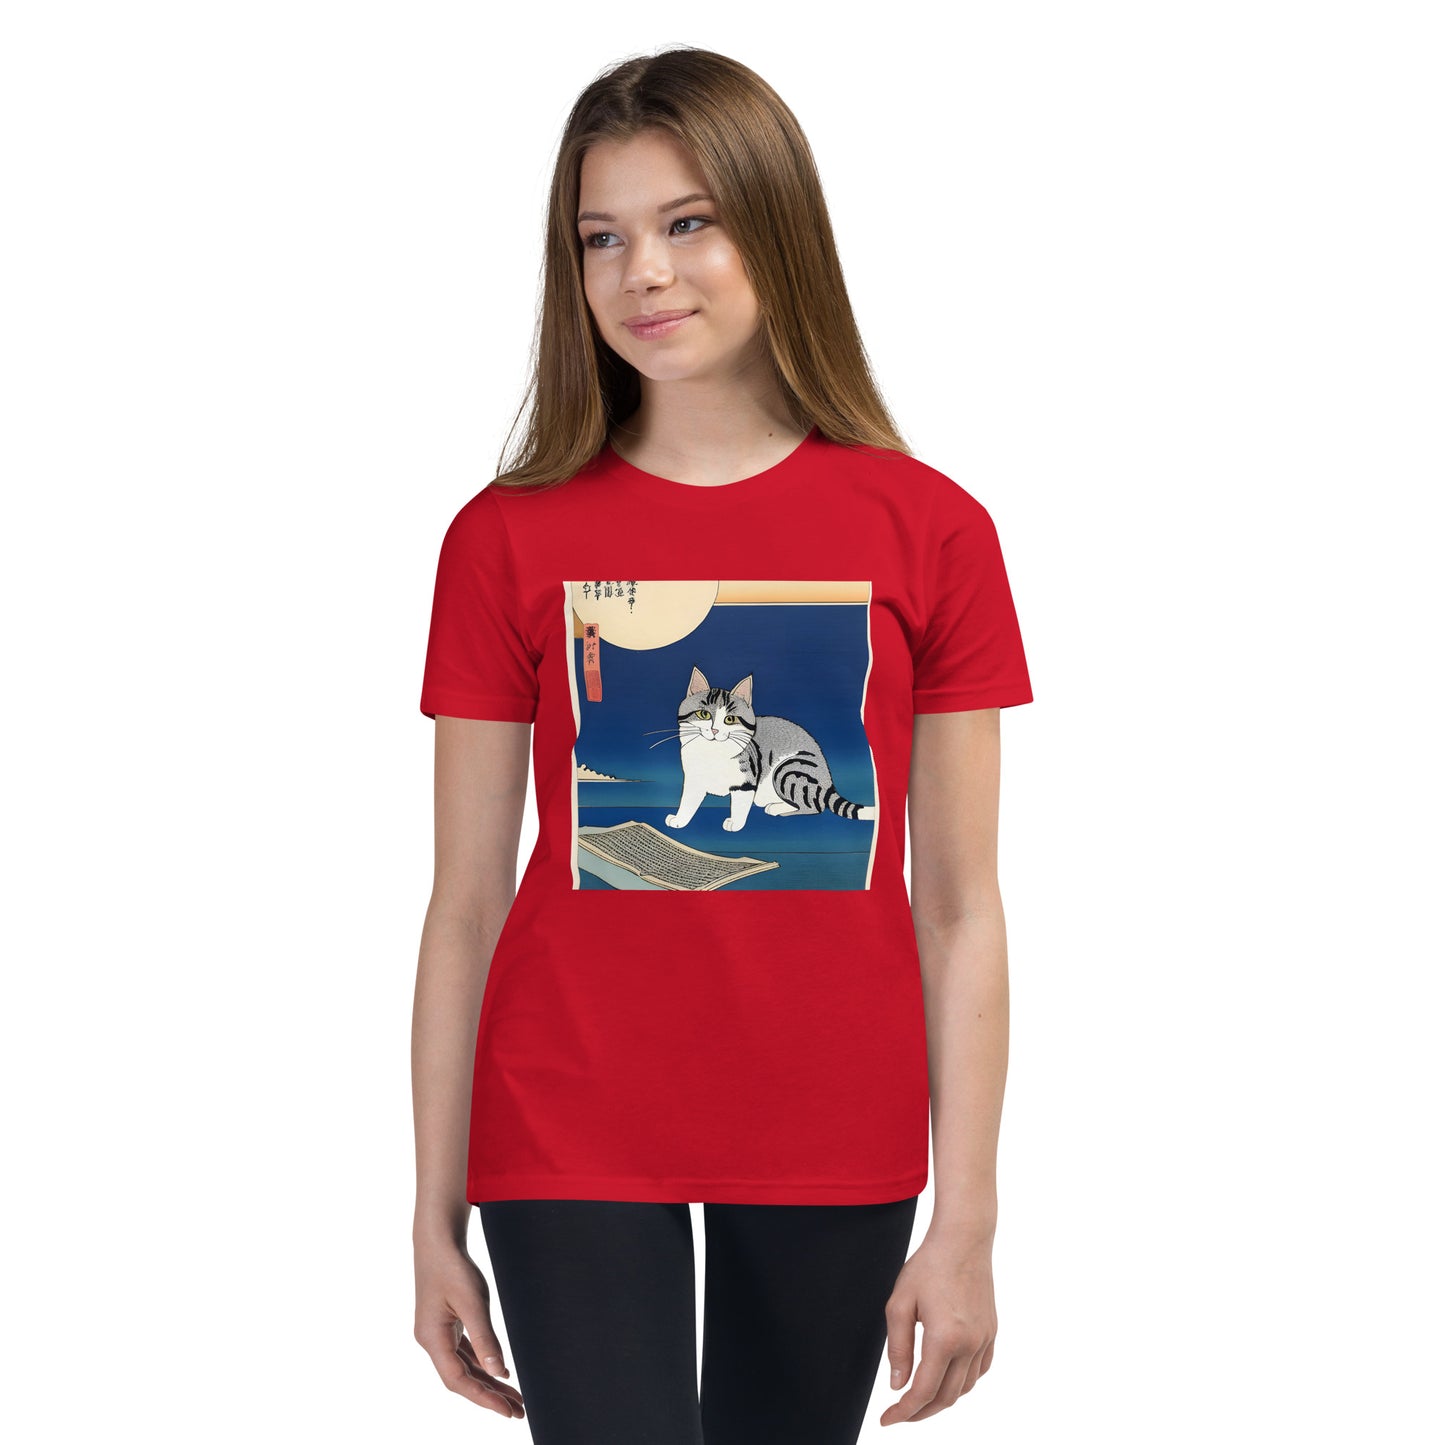 Meowsome Kid's T-Shirt - 027